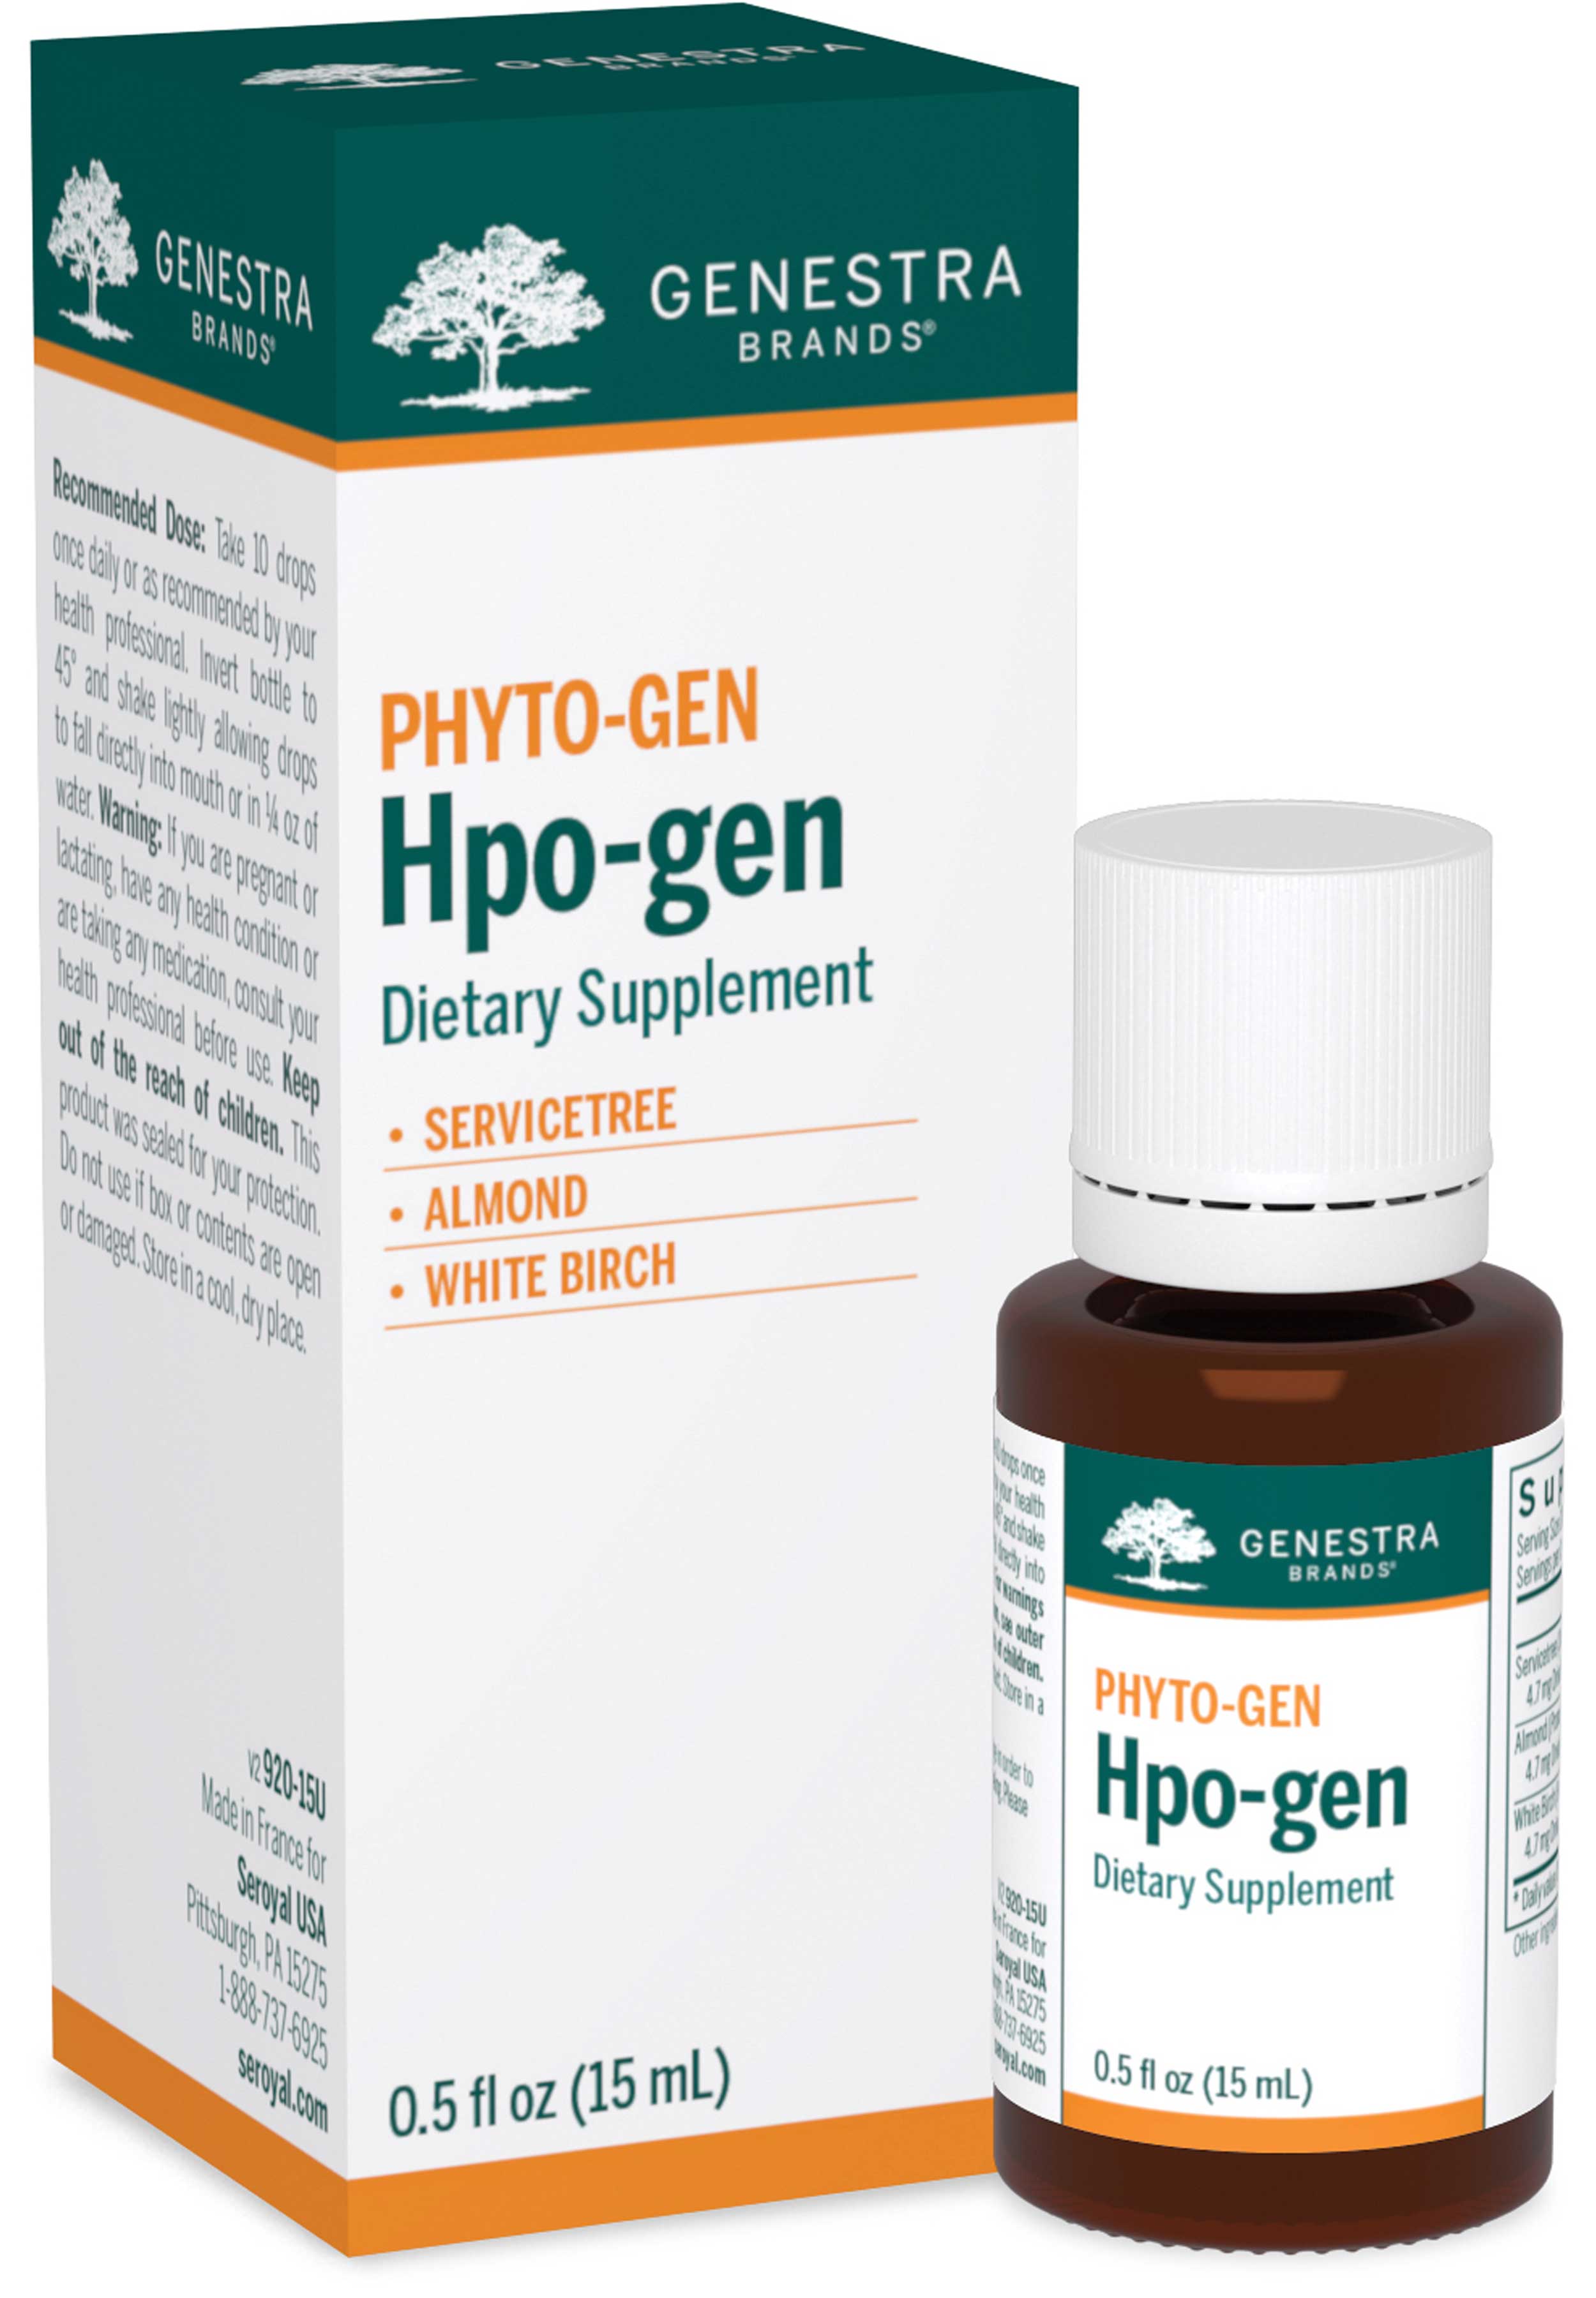 Genestra Brands Hpo-gen